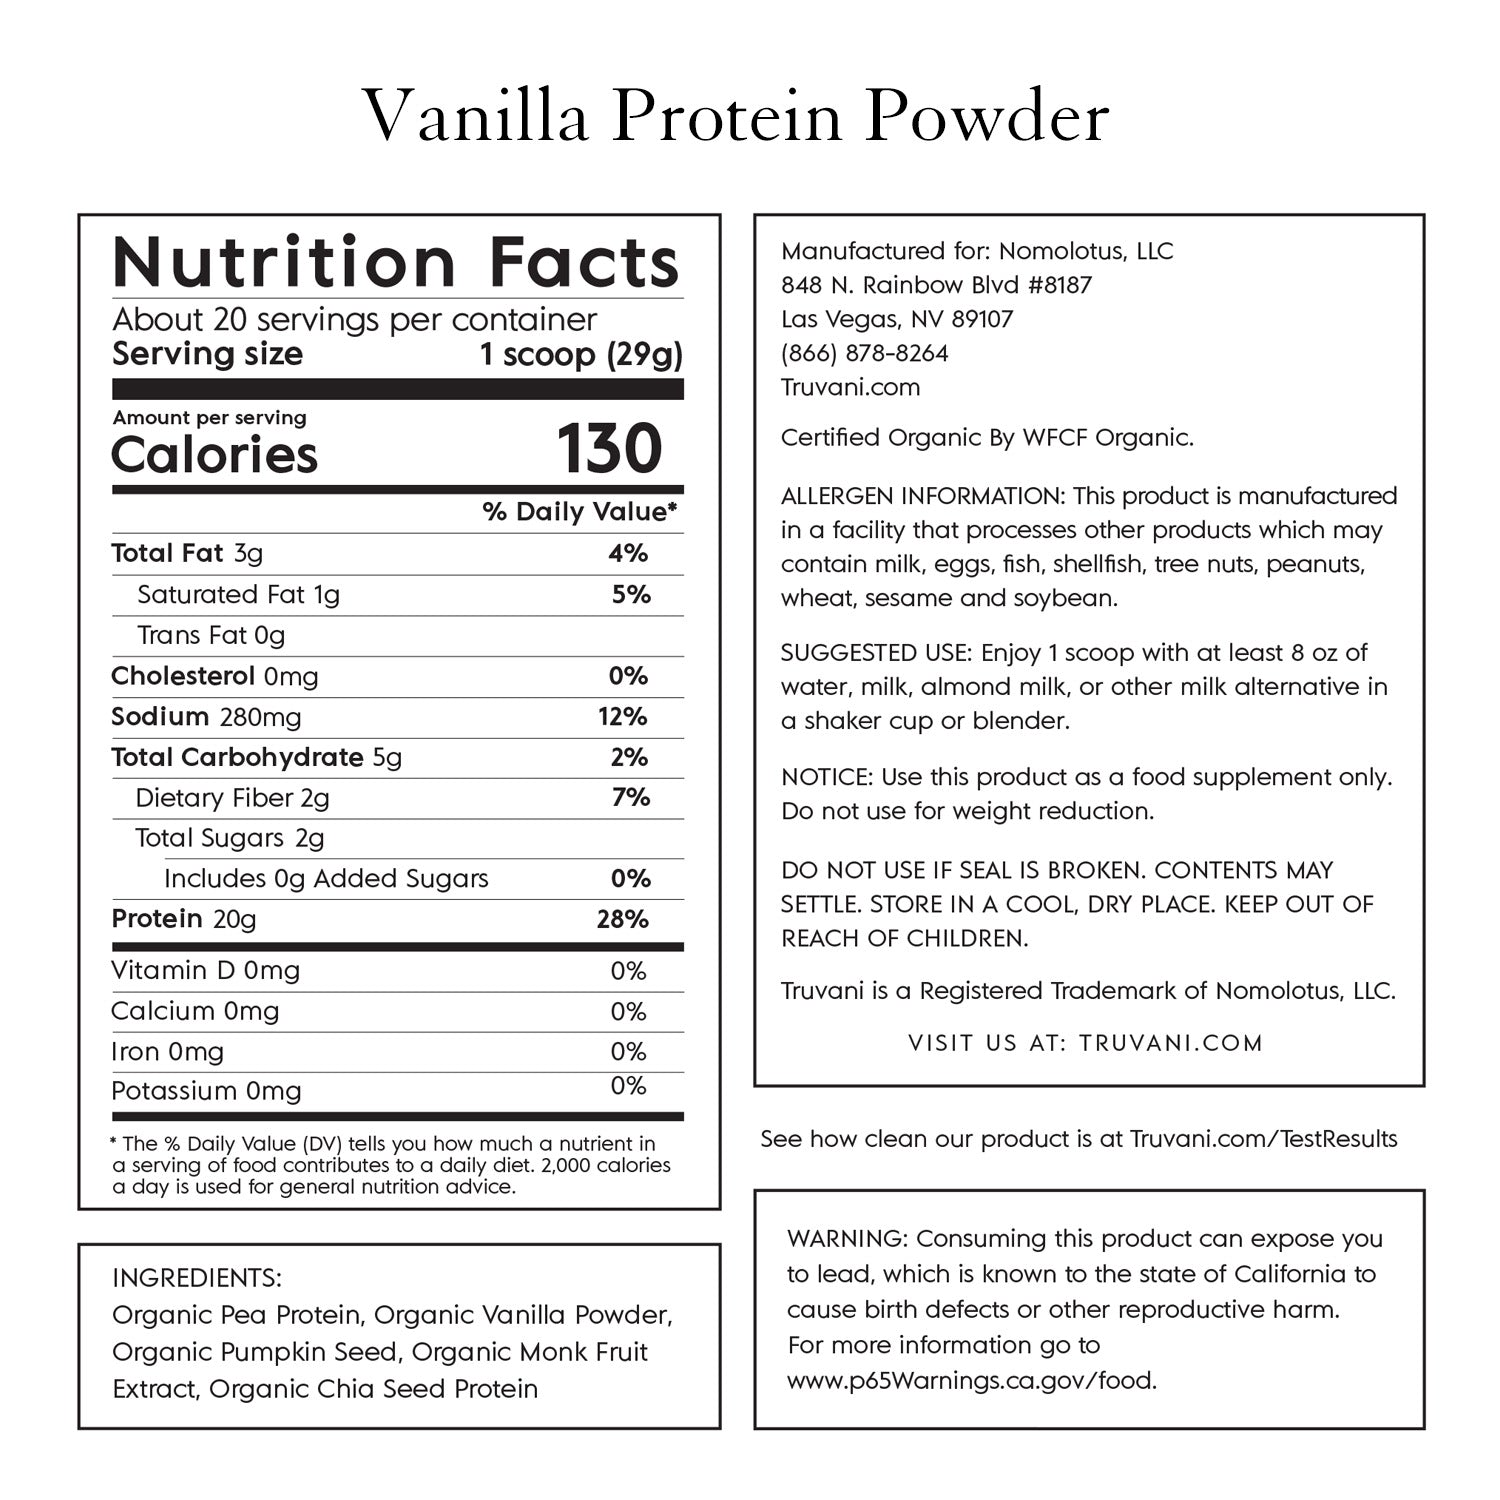 5) Travel Size Protein - Vanilla – THE OFFICE HEALTH